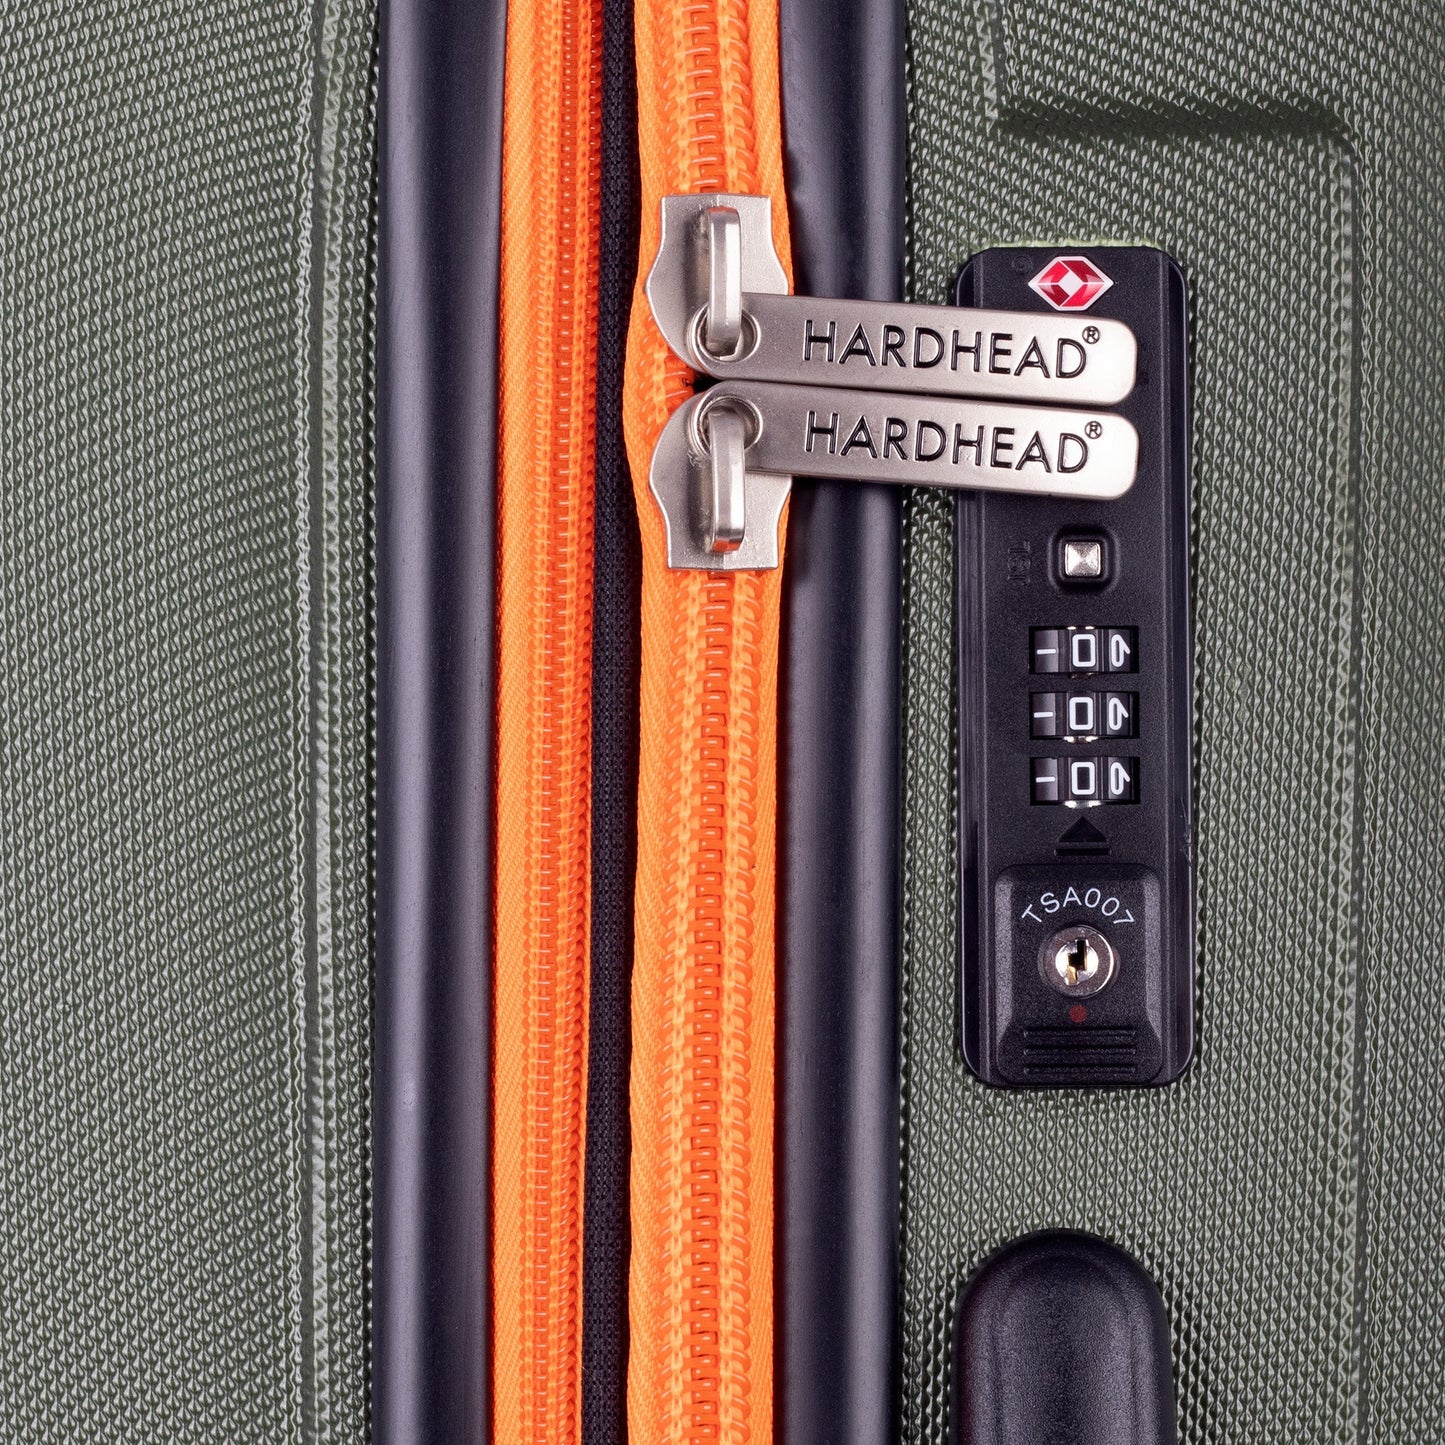 Nayax Collection Green Luggage (20/24/28") Suitcase Lock Spinner Hardshell